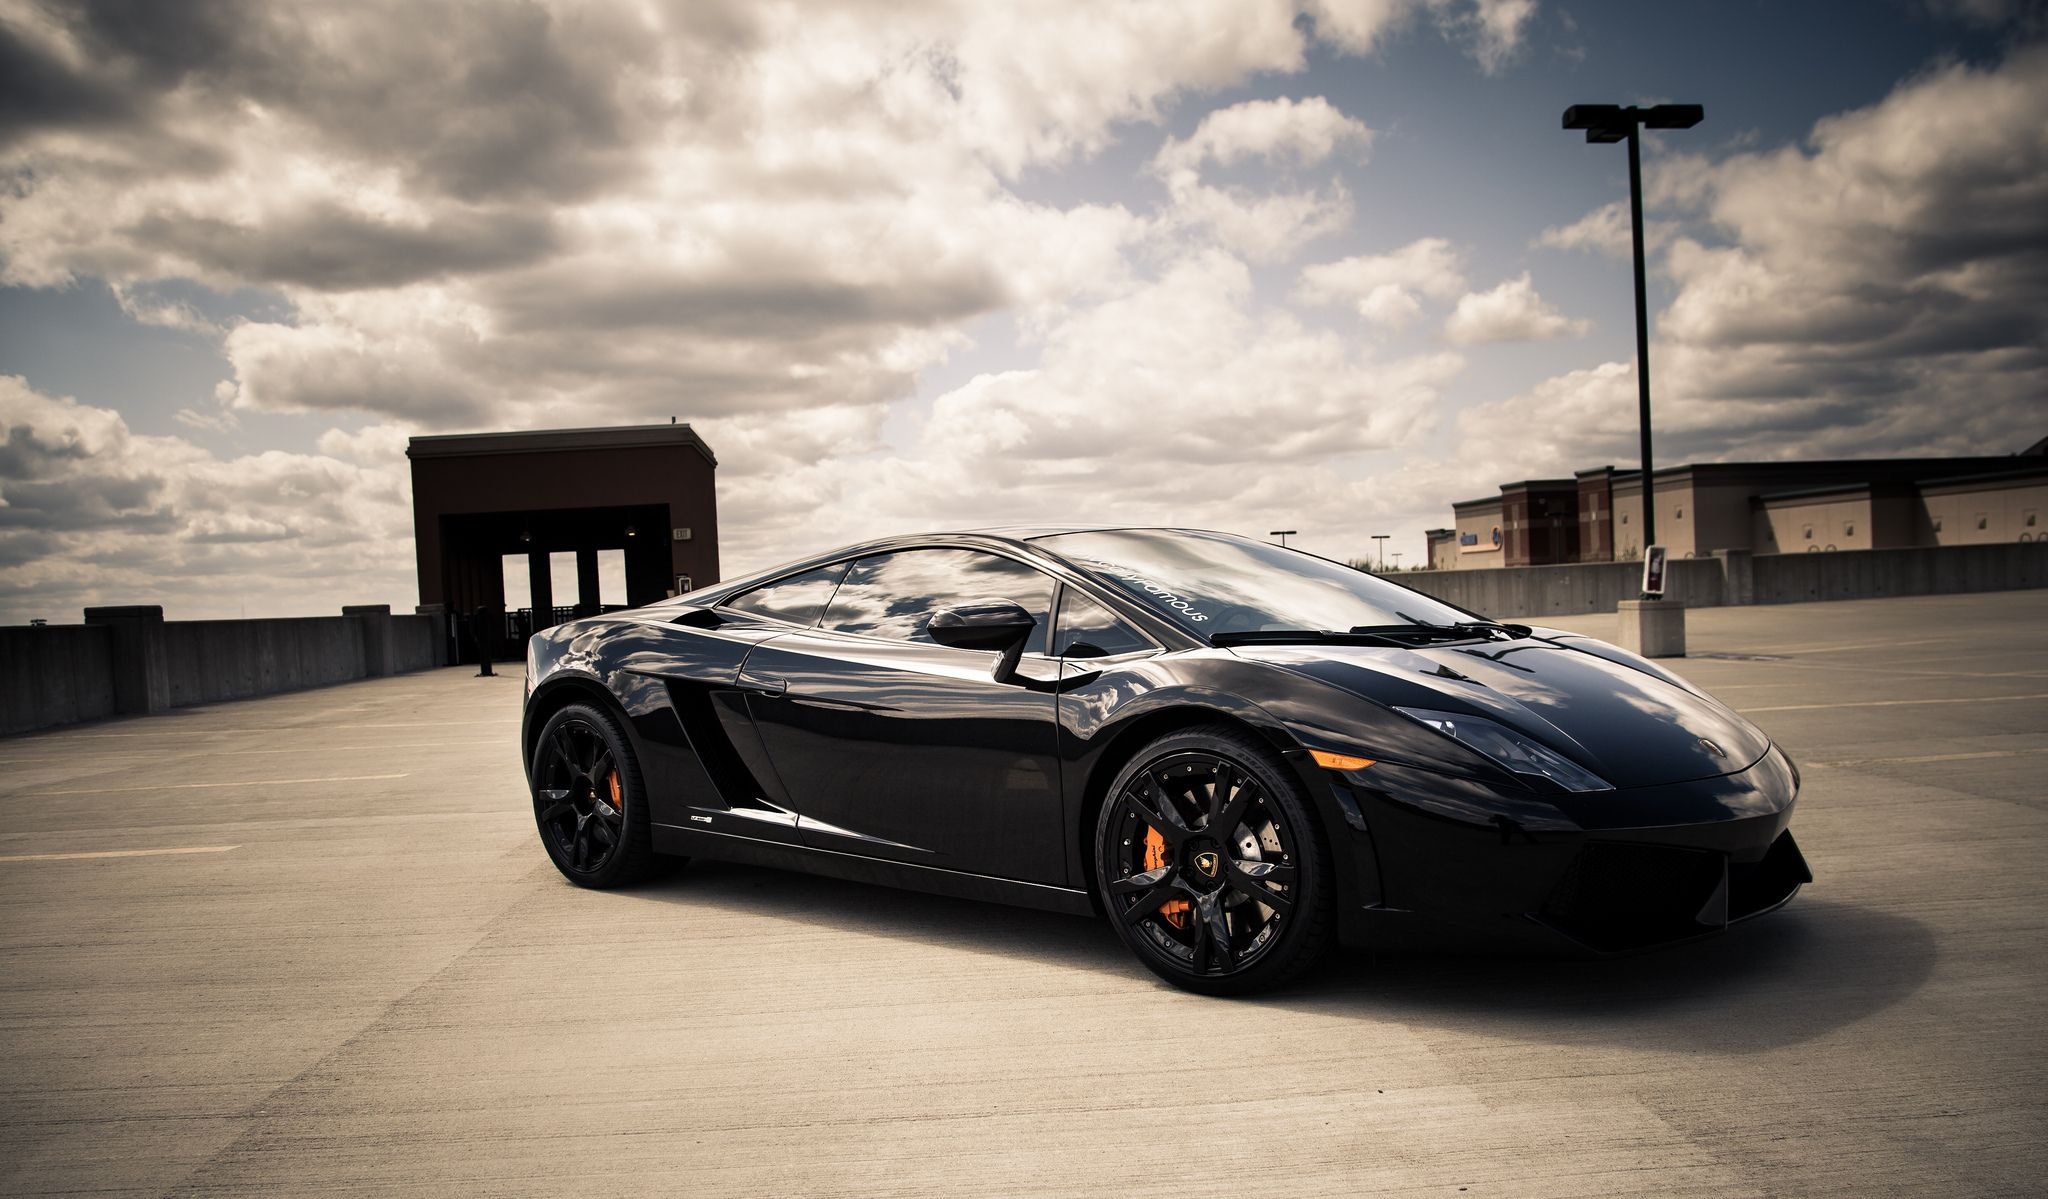 Lamborghini Gallardo, HD car wallpaper, Black beauty, Luxury sports car, 2050x1200 HD Desktop